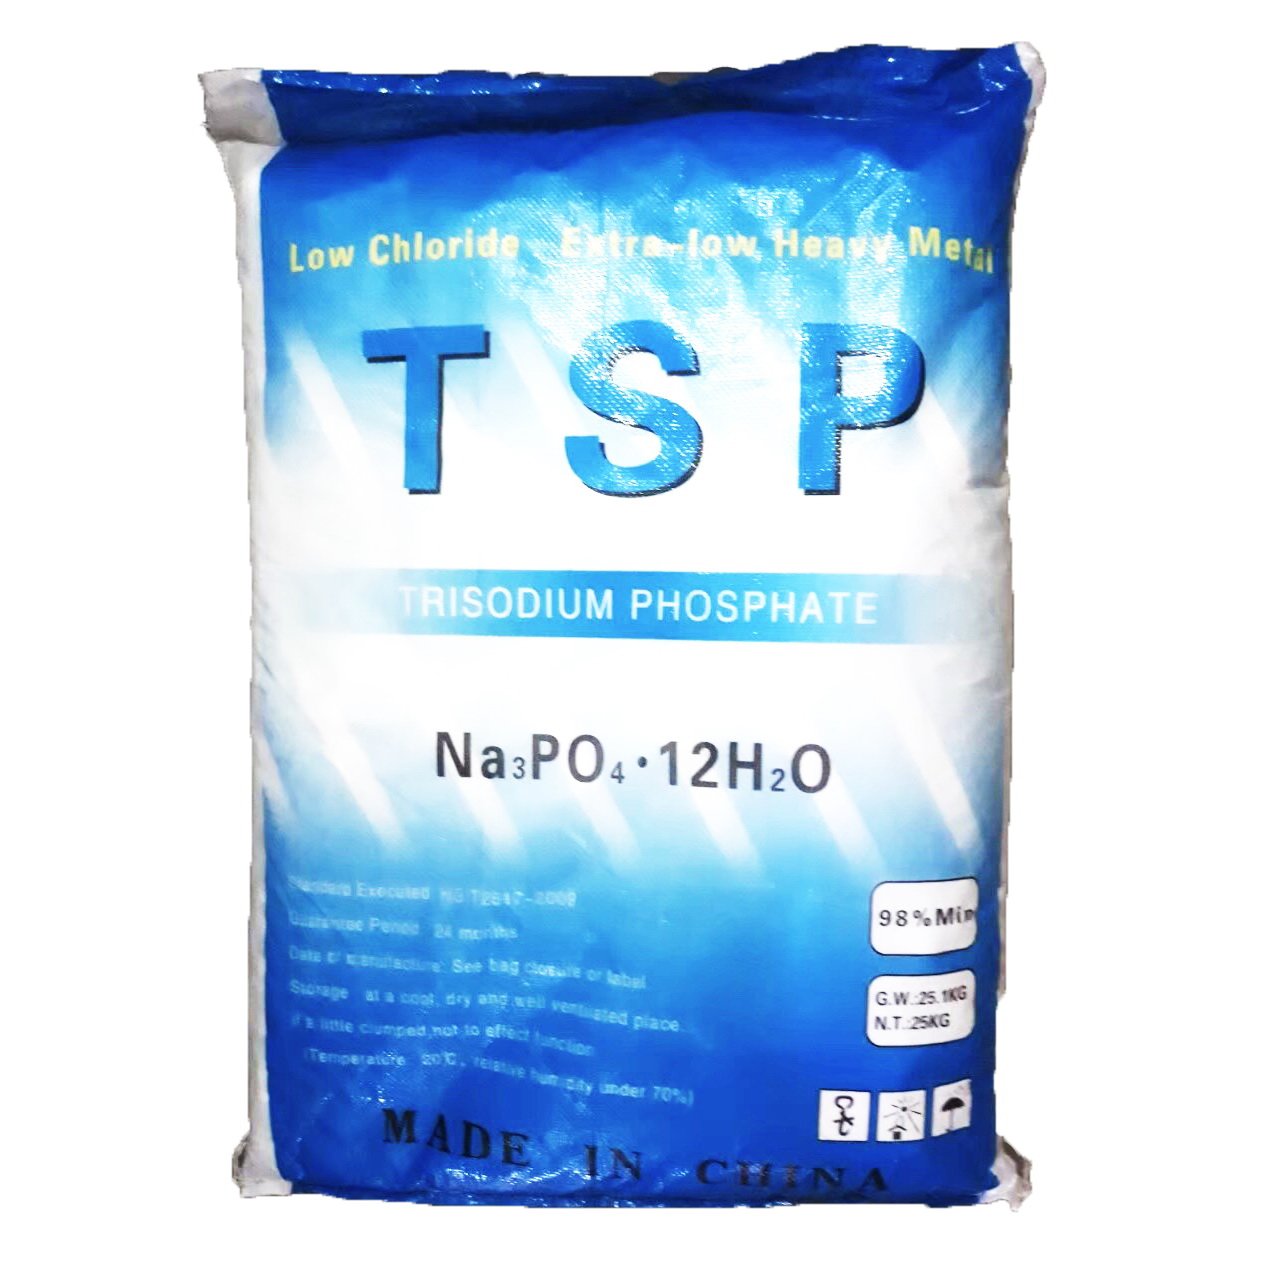 TRISODIUM PHOSPHATE 12H2O 98% Low Chloride